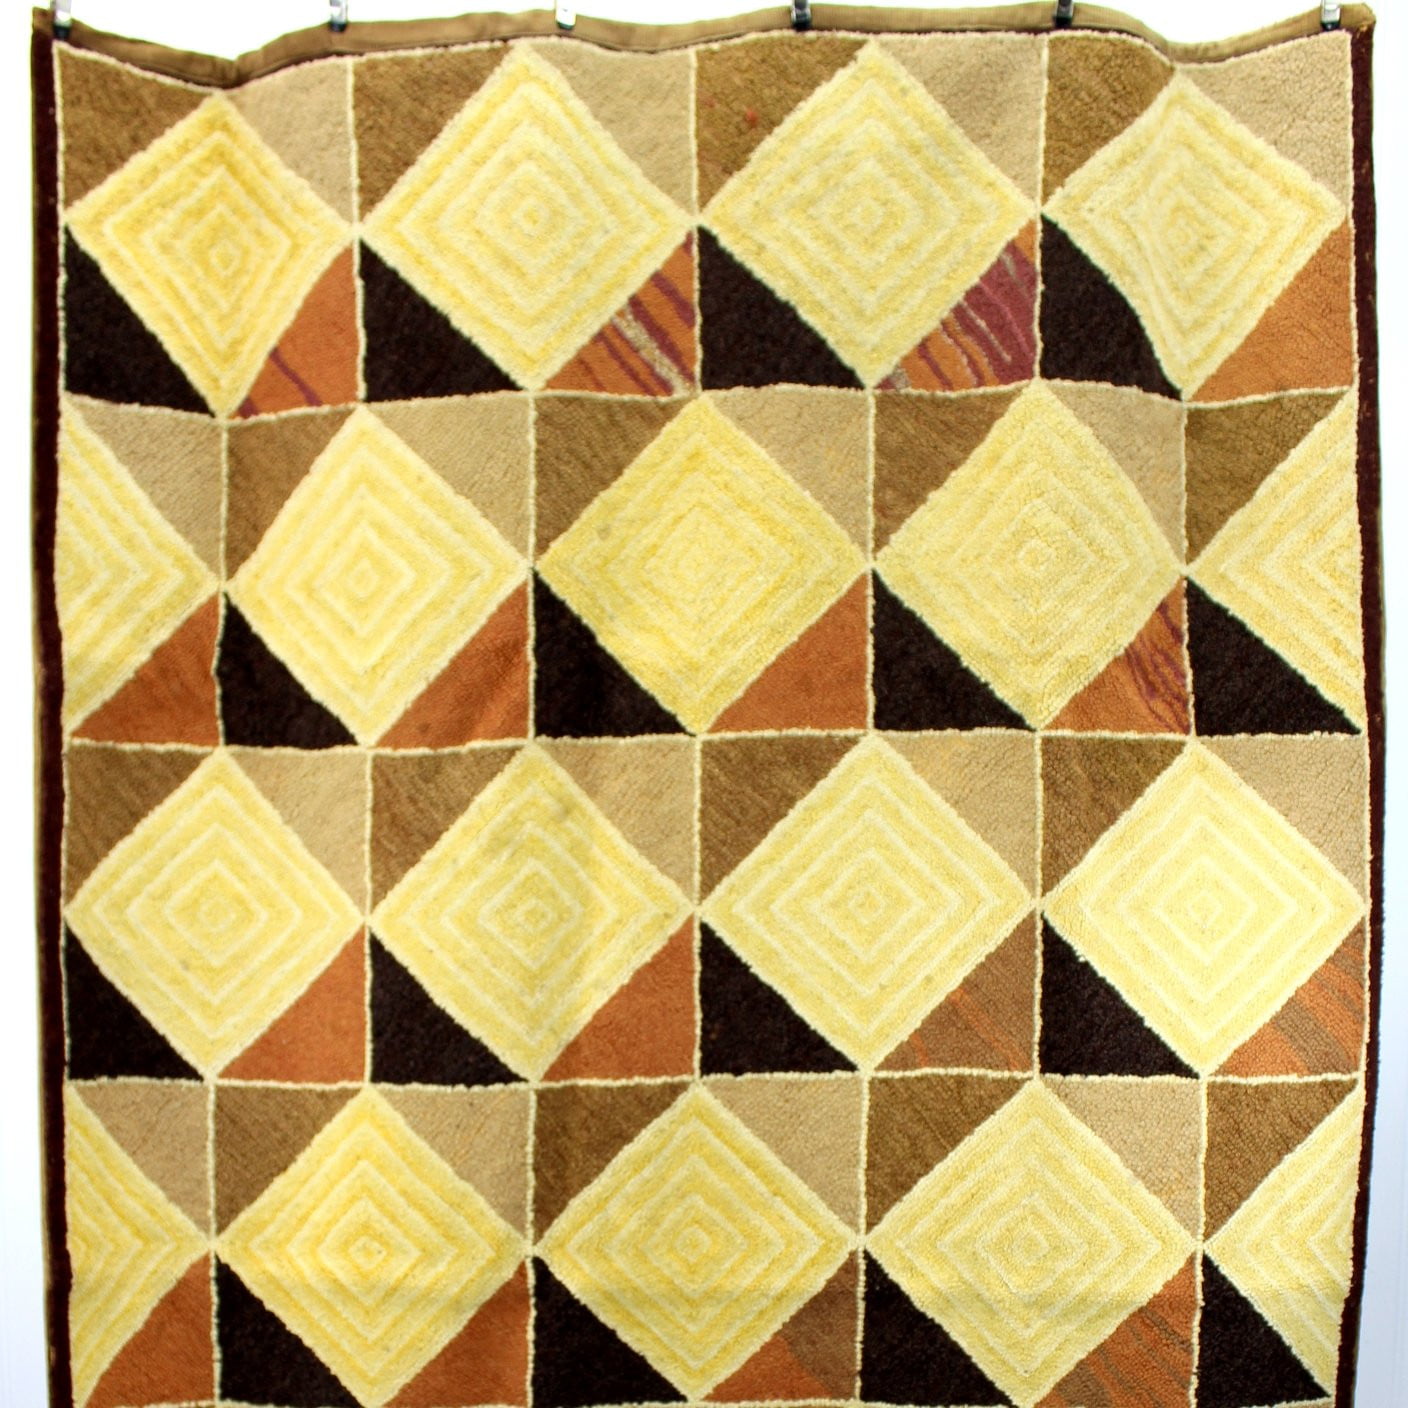 Vintage 1950s Hand Hooked Wool Rug - Tumbling Block Pattern - Mid Century Provenance